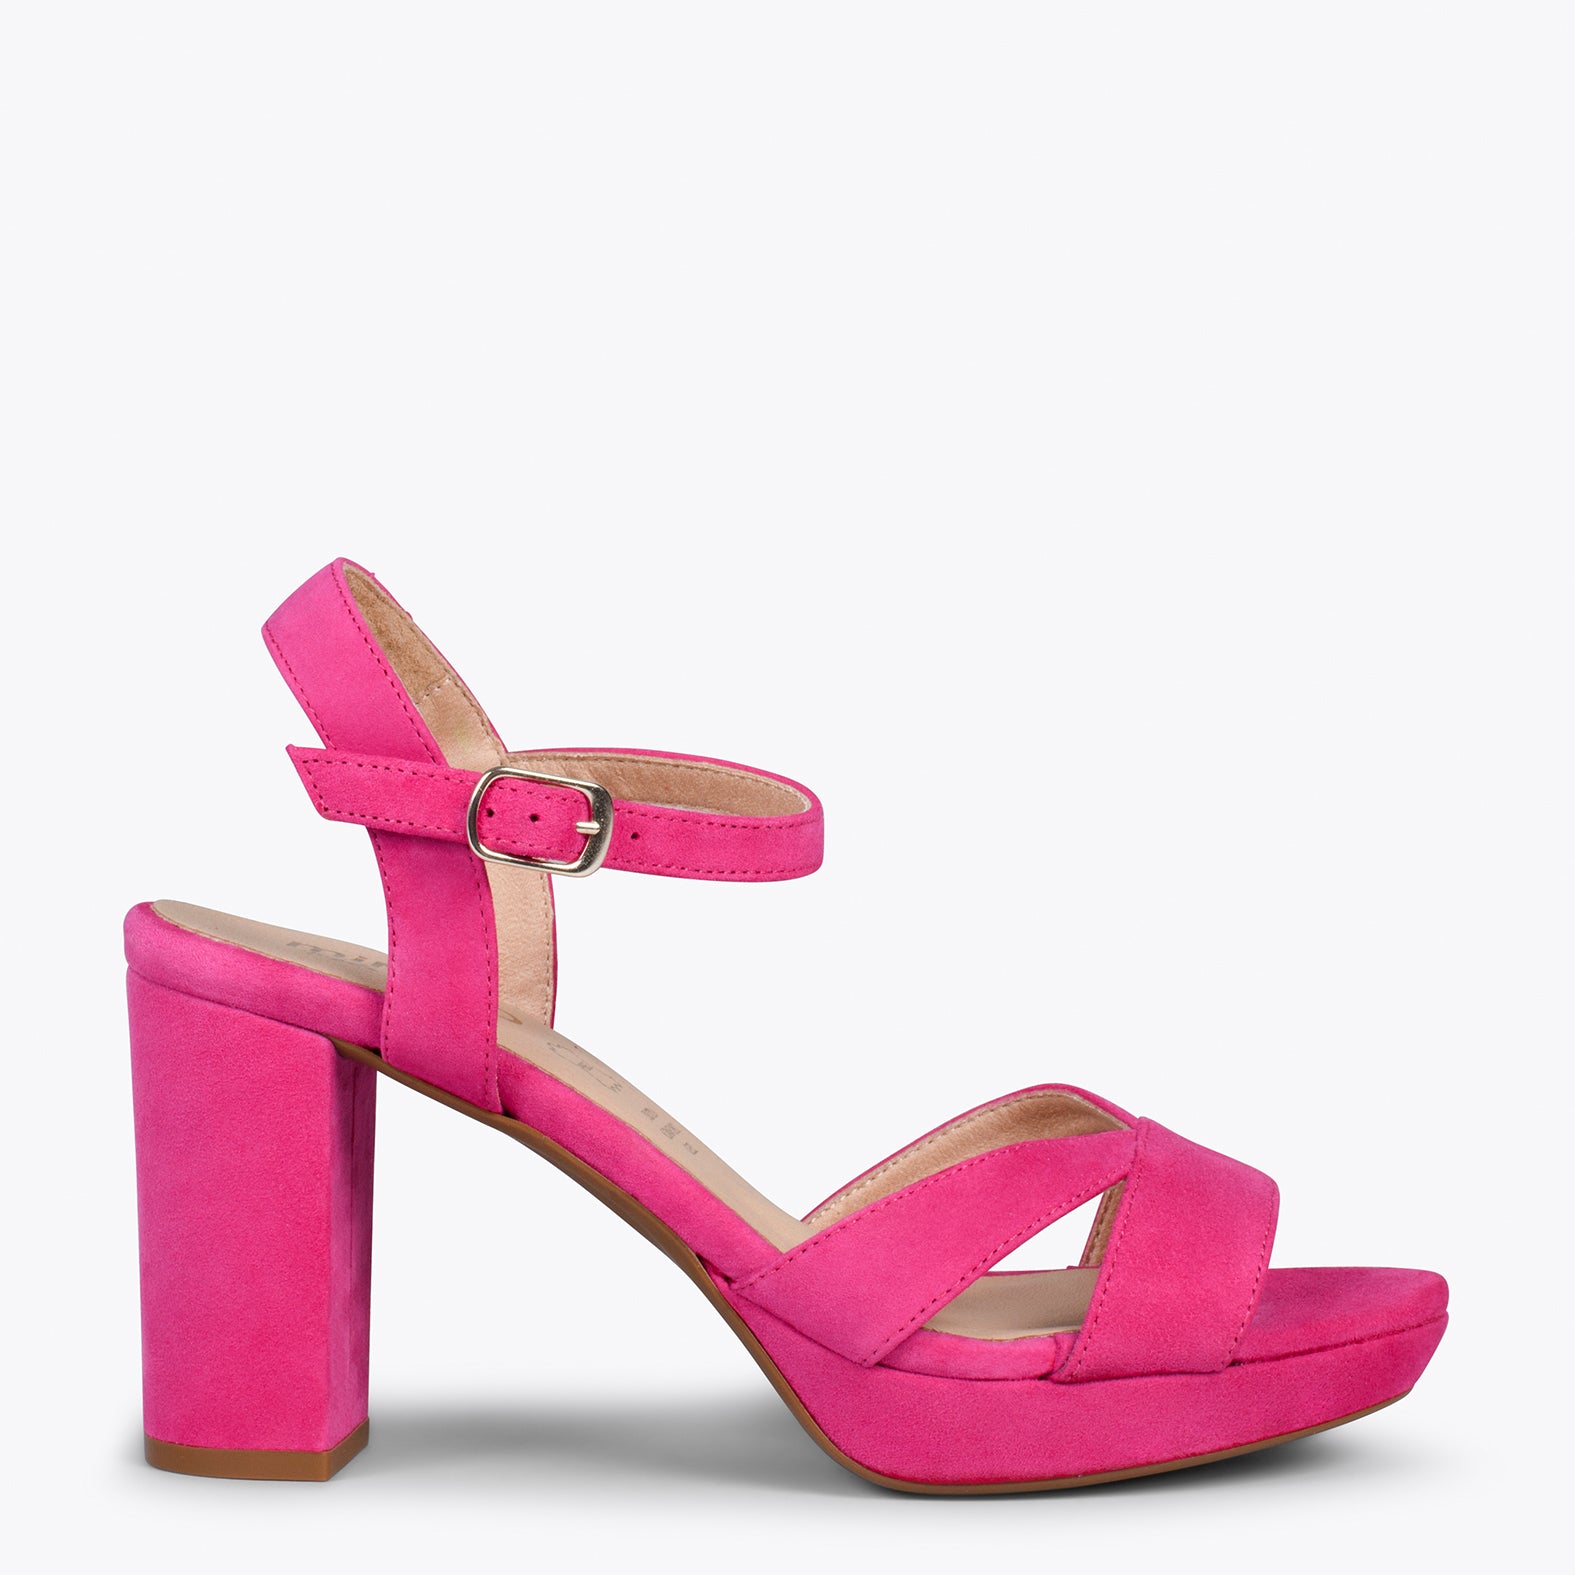 PARIS – FUCHSIA high heel sandal with platform